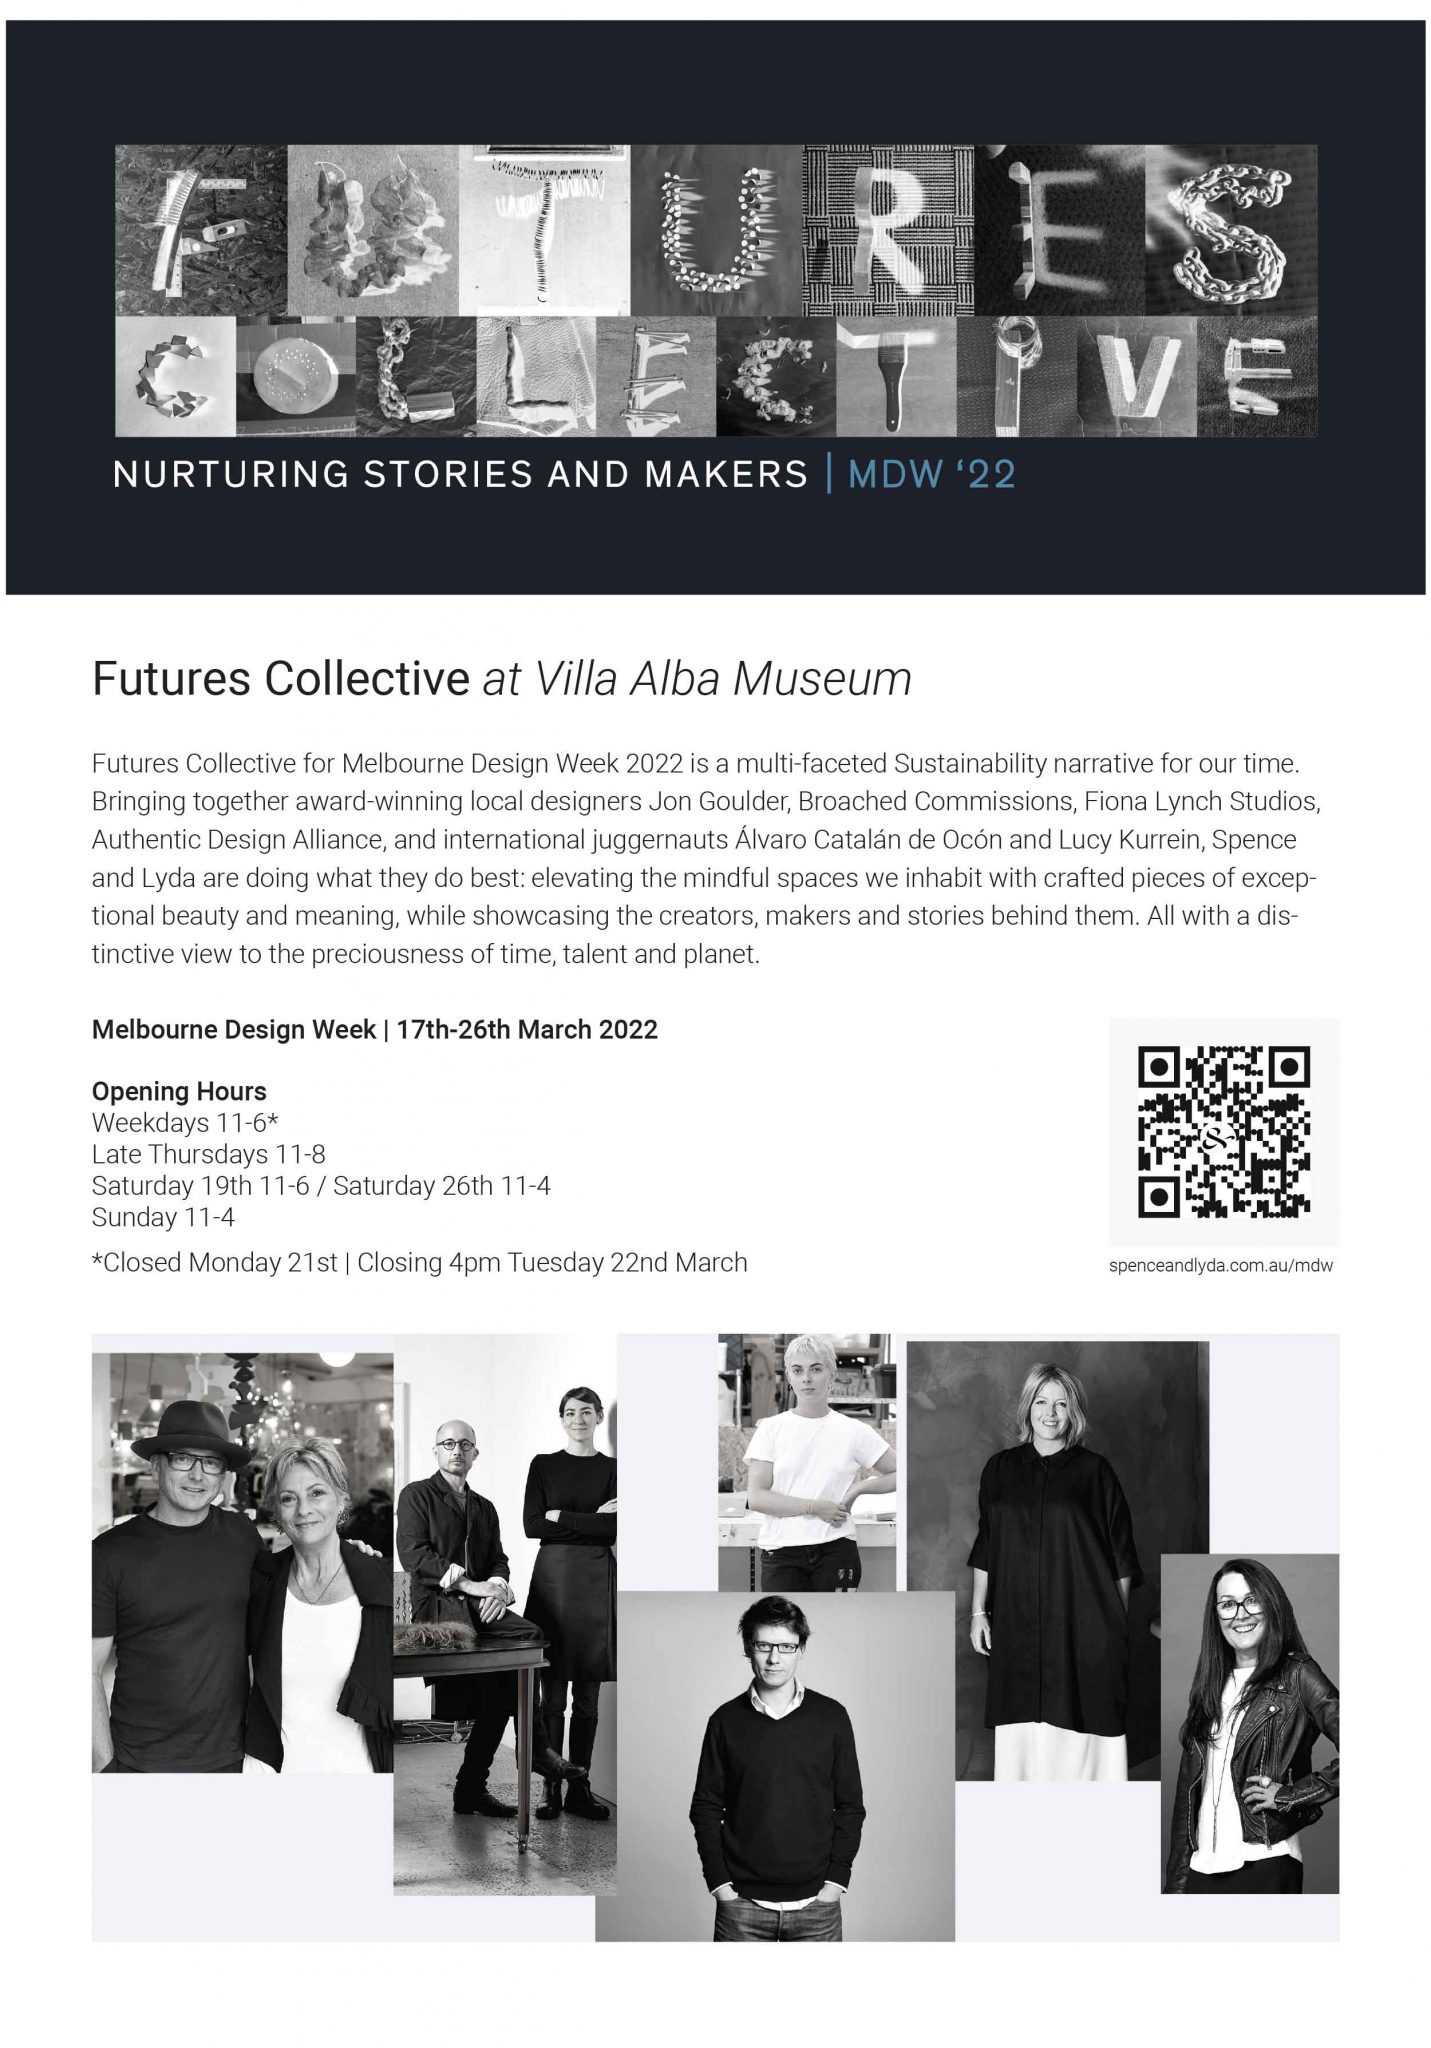 Melbourne Design Week 22 FUTURES COLLECTIVE Villa Alba Museum - Press Release